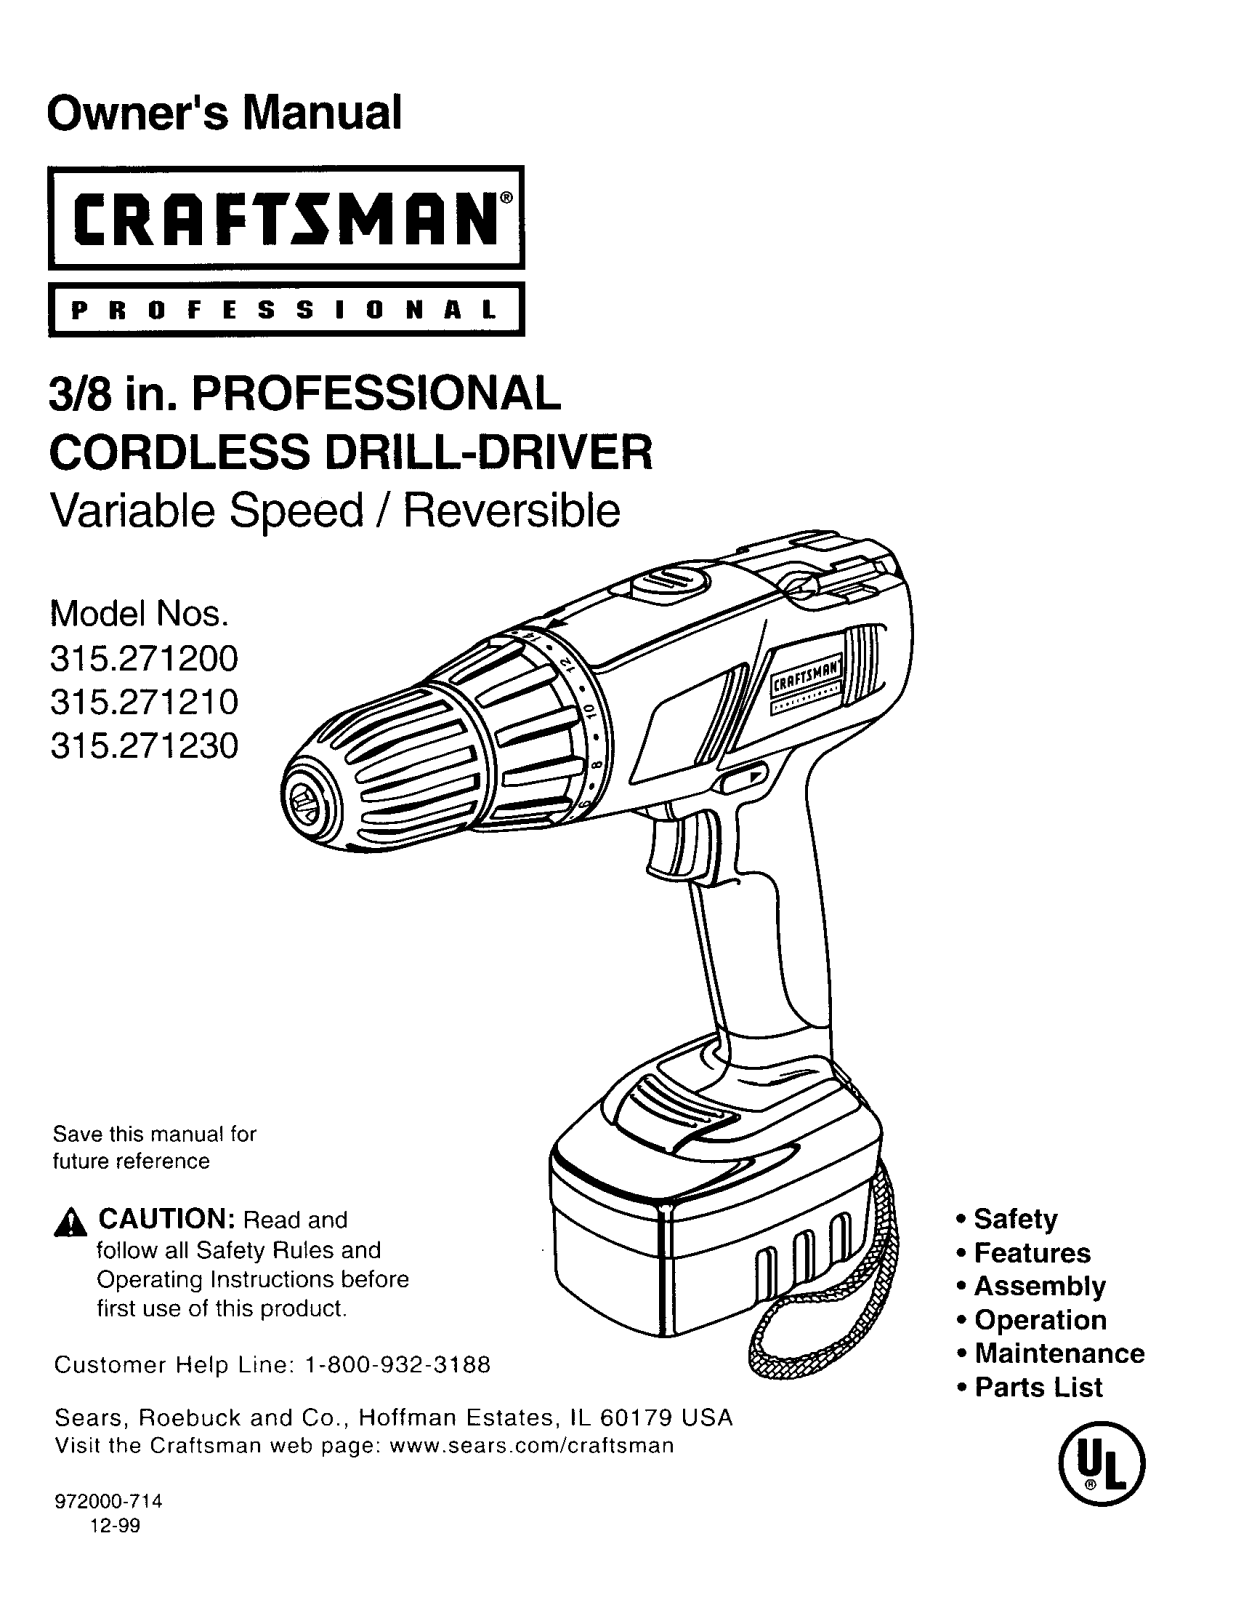 Craftsman 315271200, 315271230, 315271210 Owner’s Manual